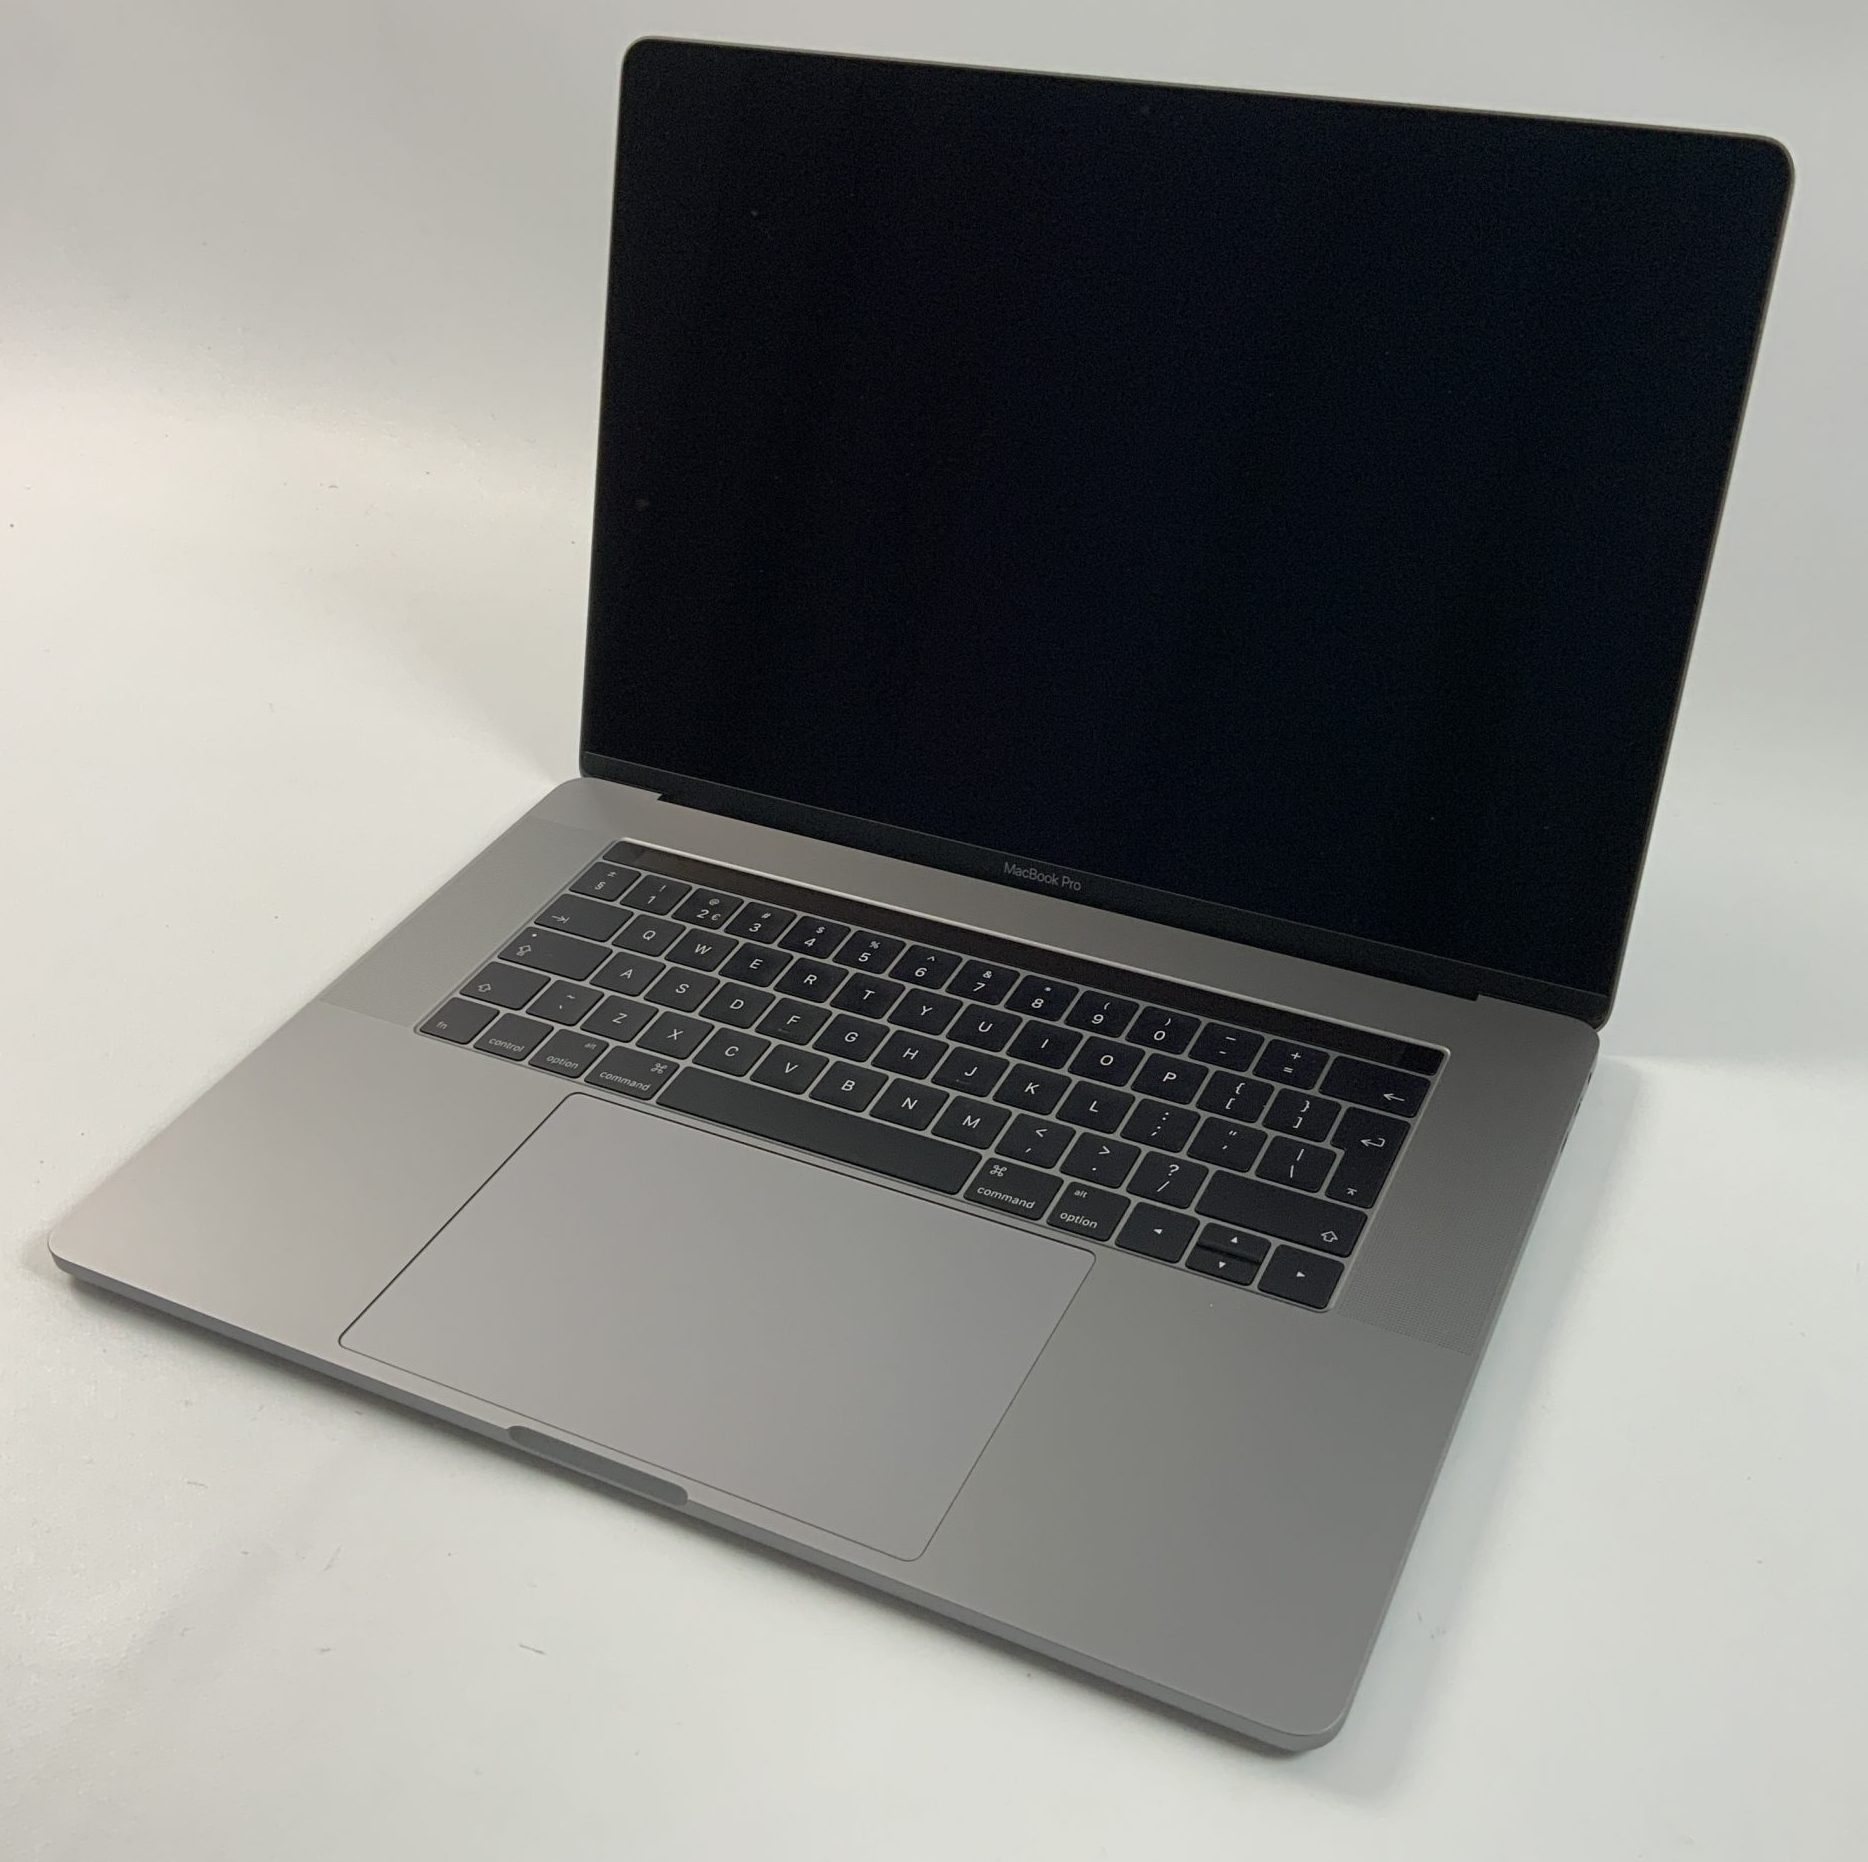 MacBook Pro 15" Touch Bar Late 2016 (Intel Quad-Core i7 2.6 GHz 16 GB RAM 256 GB SSD), Silver, Intel Quad-Core i7 2.6 GHz, 16 GB RAM, 256 GB SSD, immagine 1